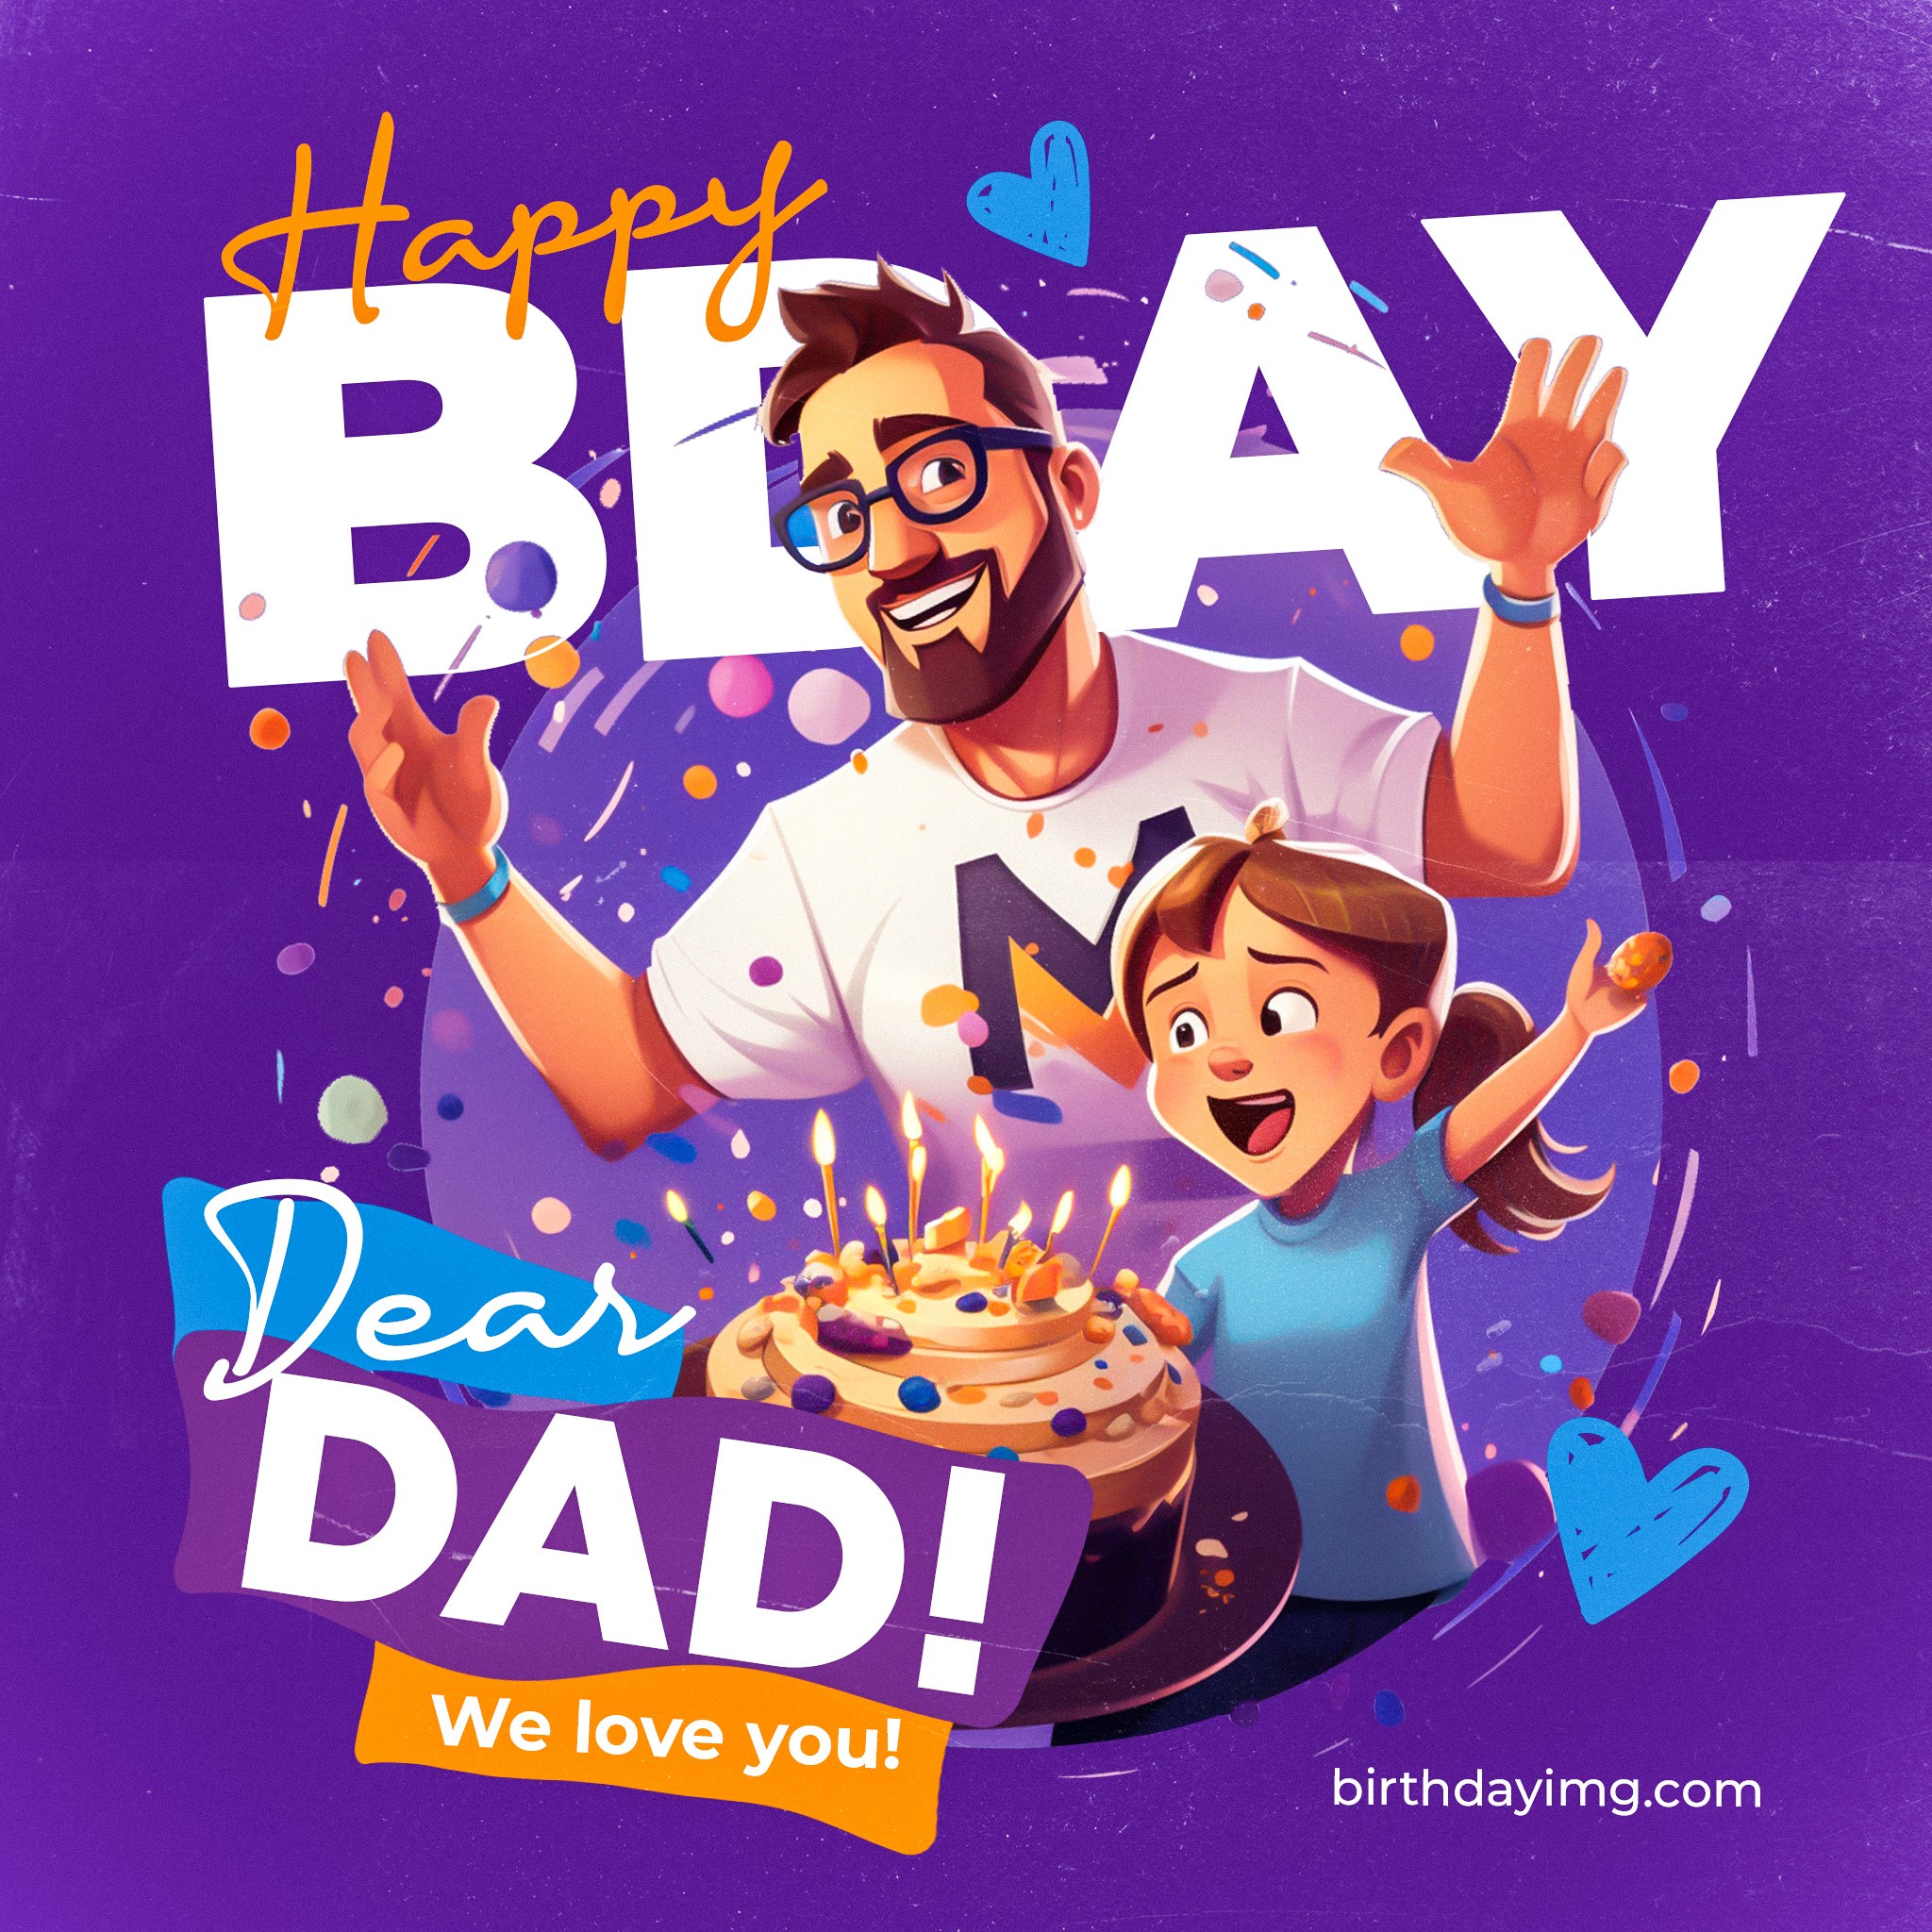 Free Happy Birthday Image for Dad - birthdayimg.com